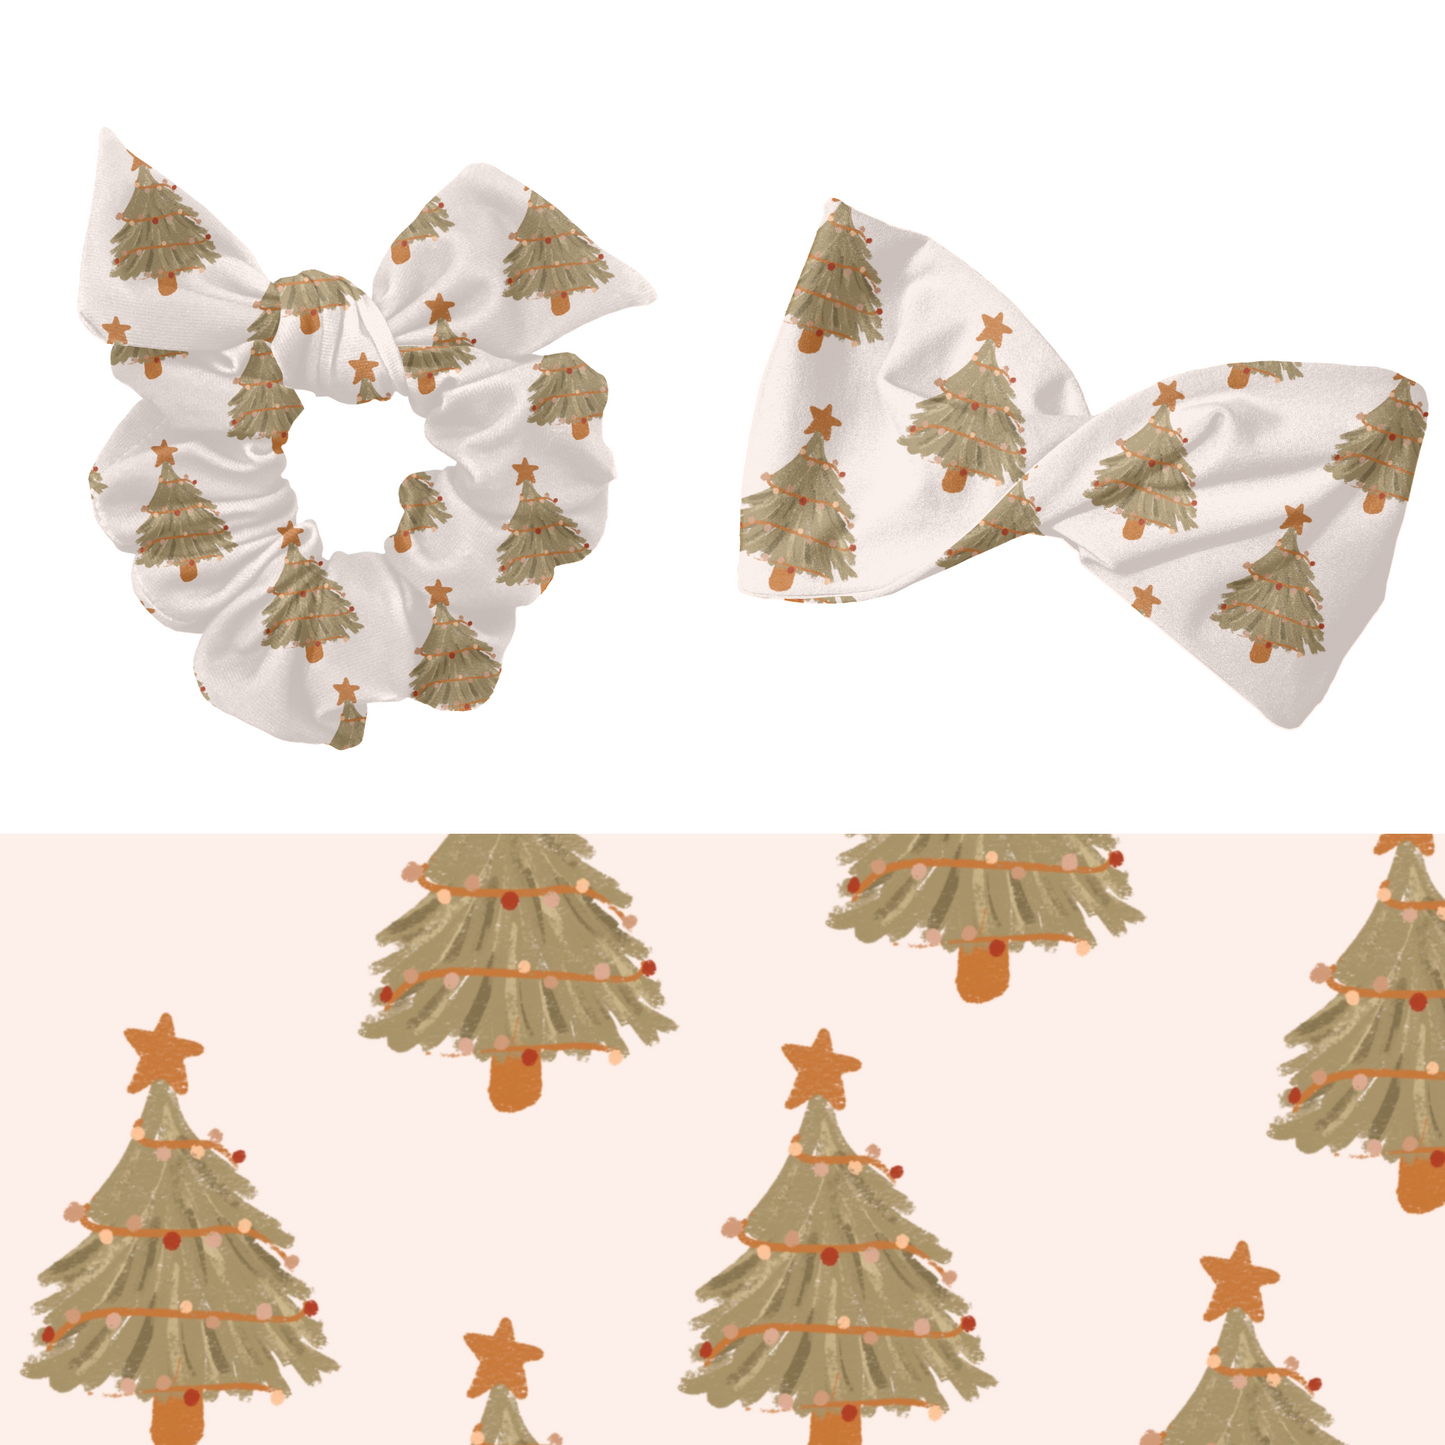 Textured Christmas tree pattern design